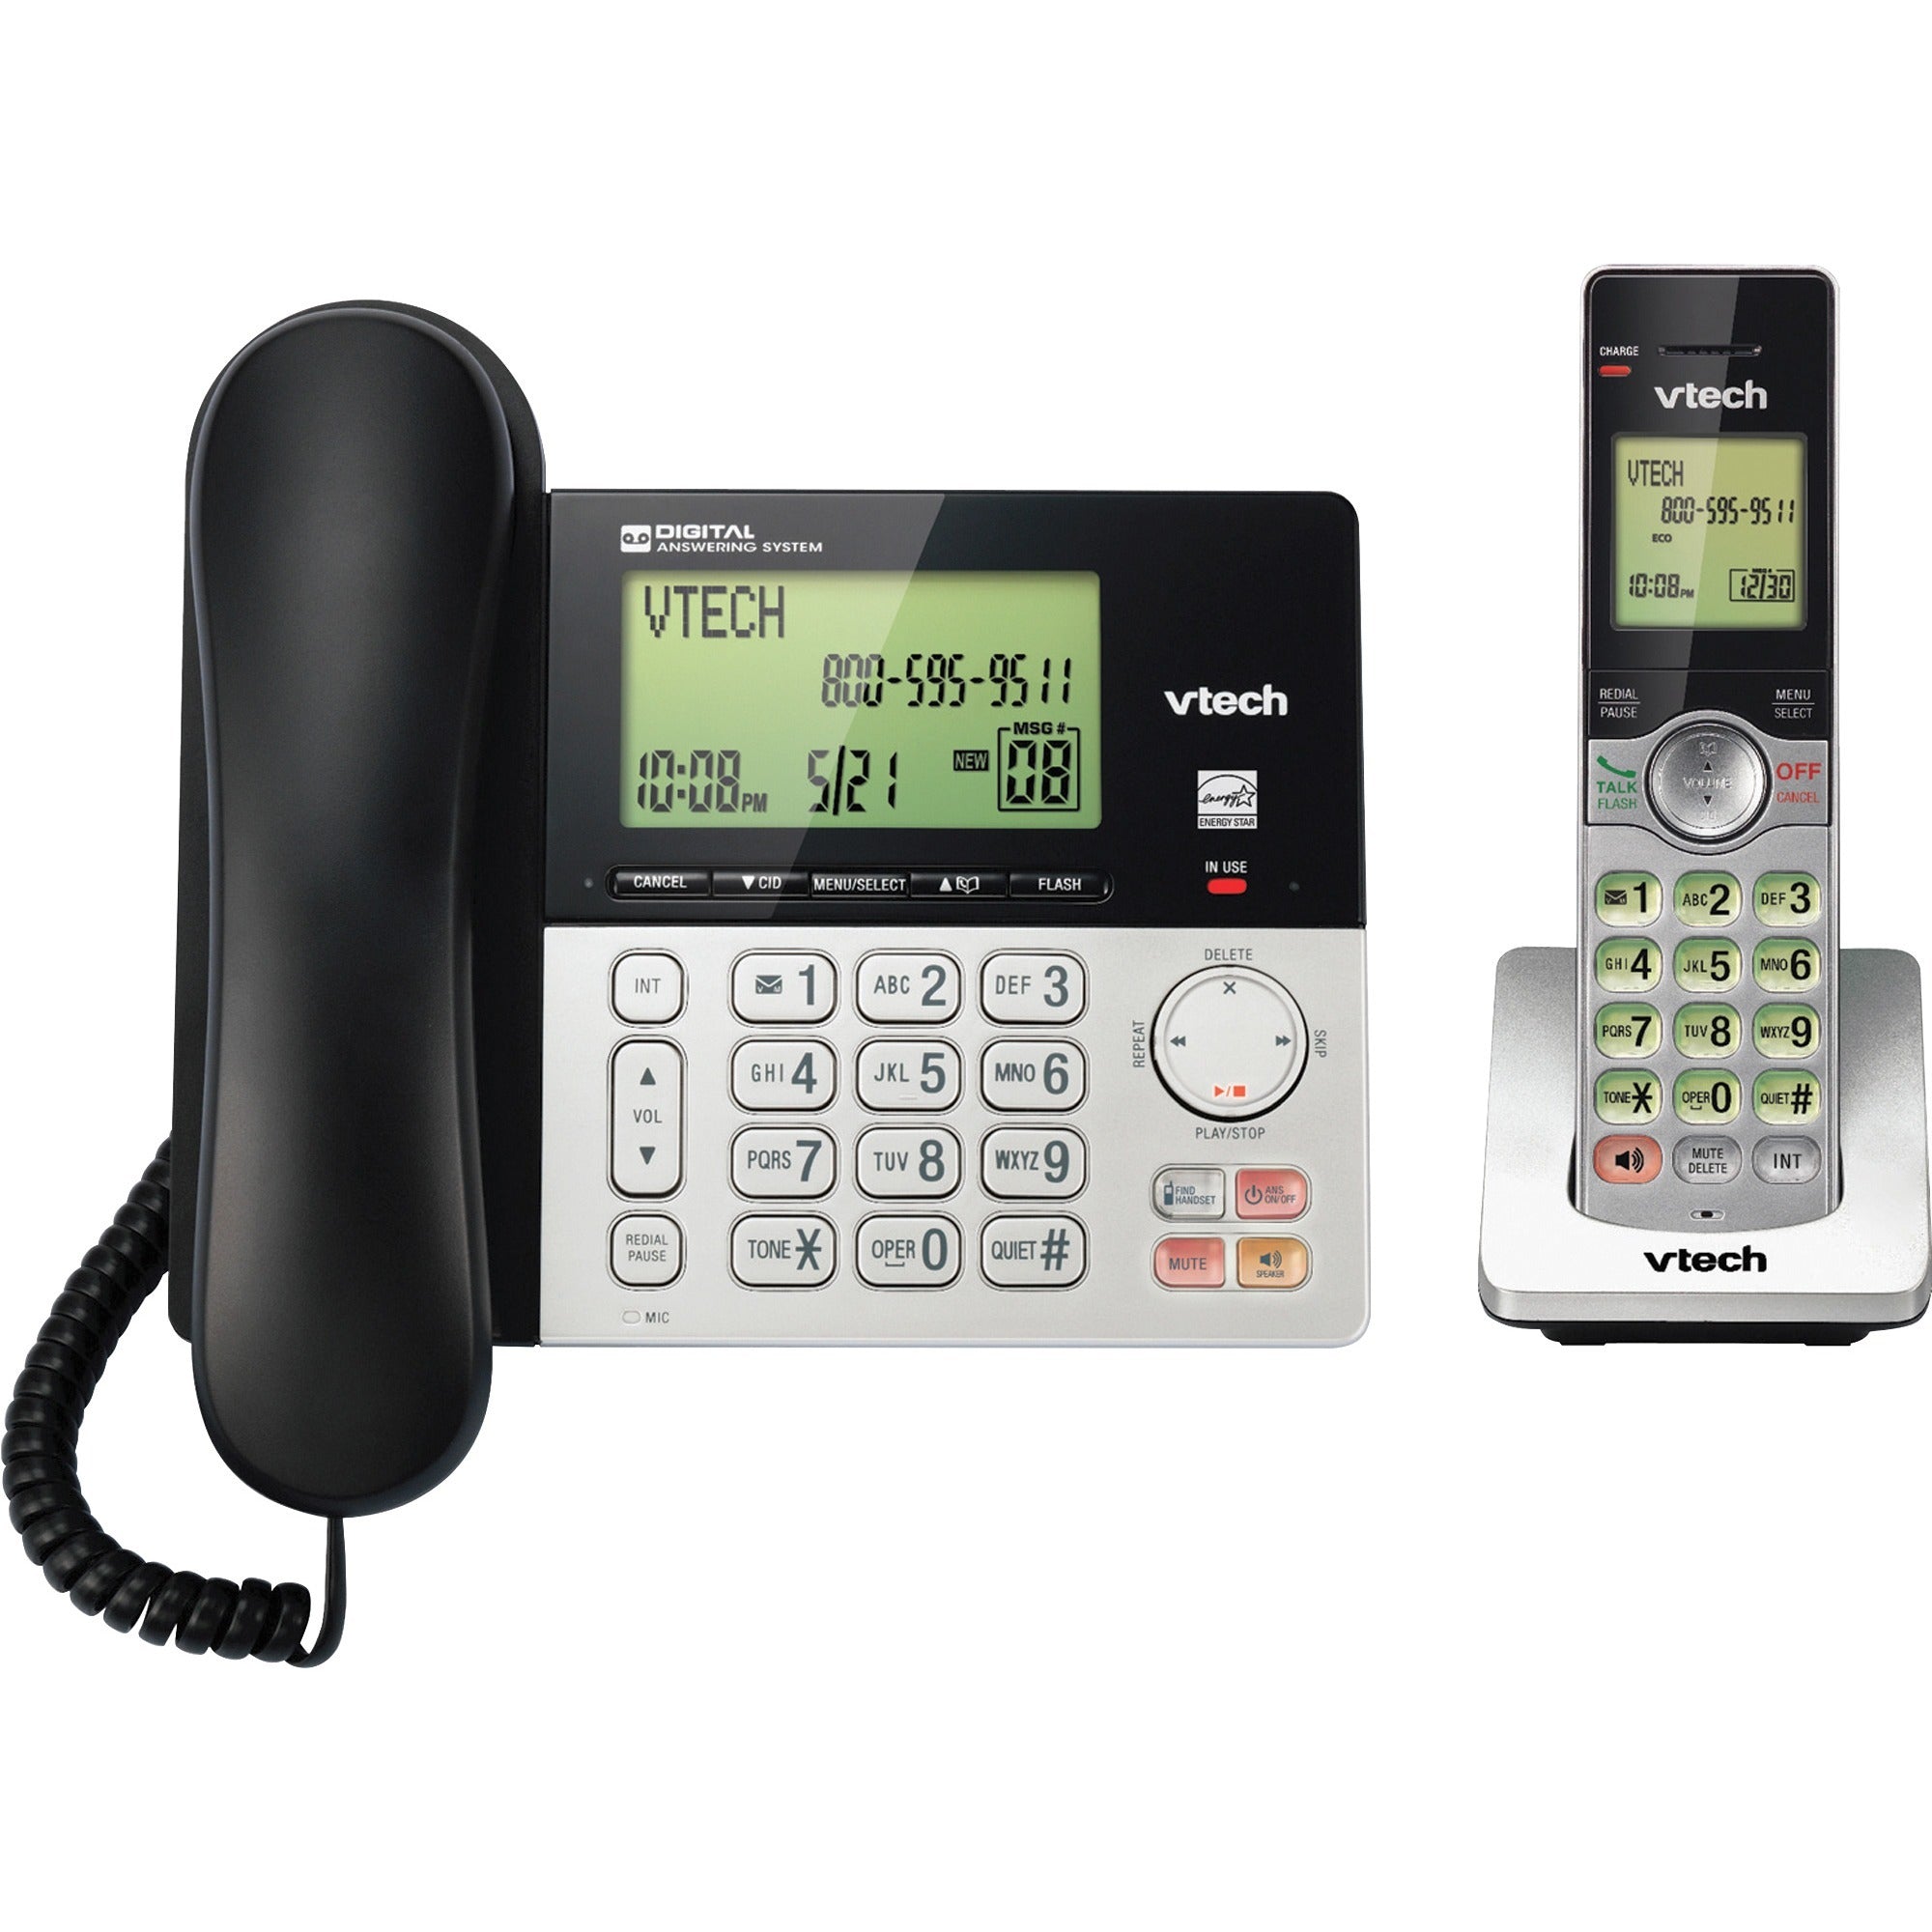 vtech-cs6949-dect-60-standard-phone-black-silver-cordless-corded-1-x-phone-line-speakerphone-answering-machine-hearing-aid-compatible_vtecs6949 - 1